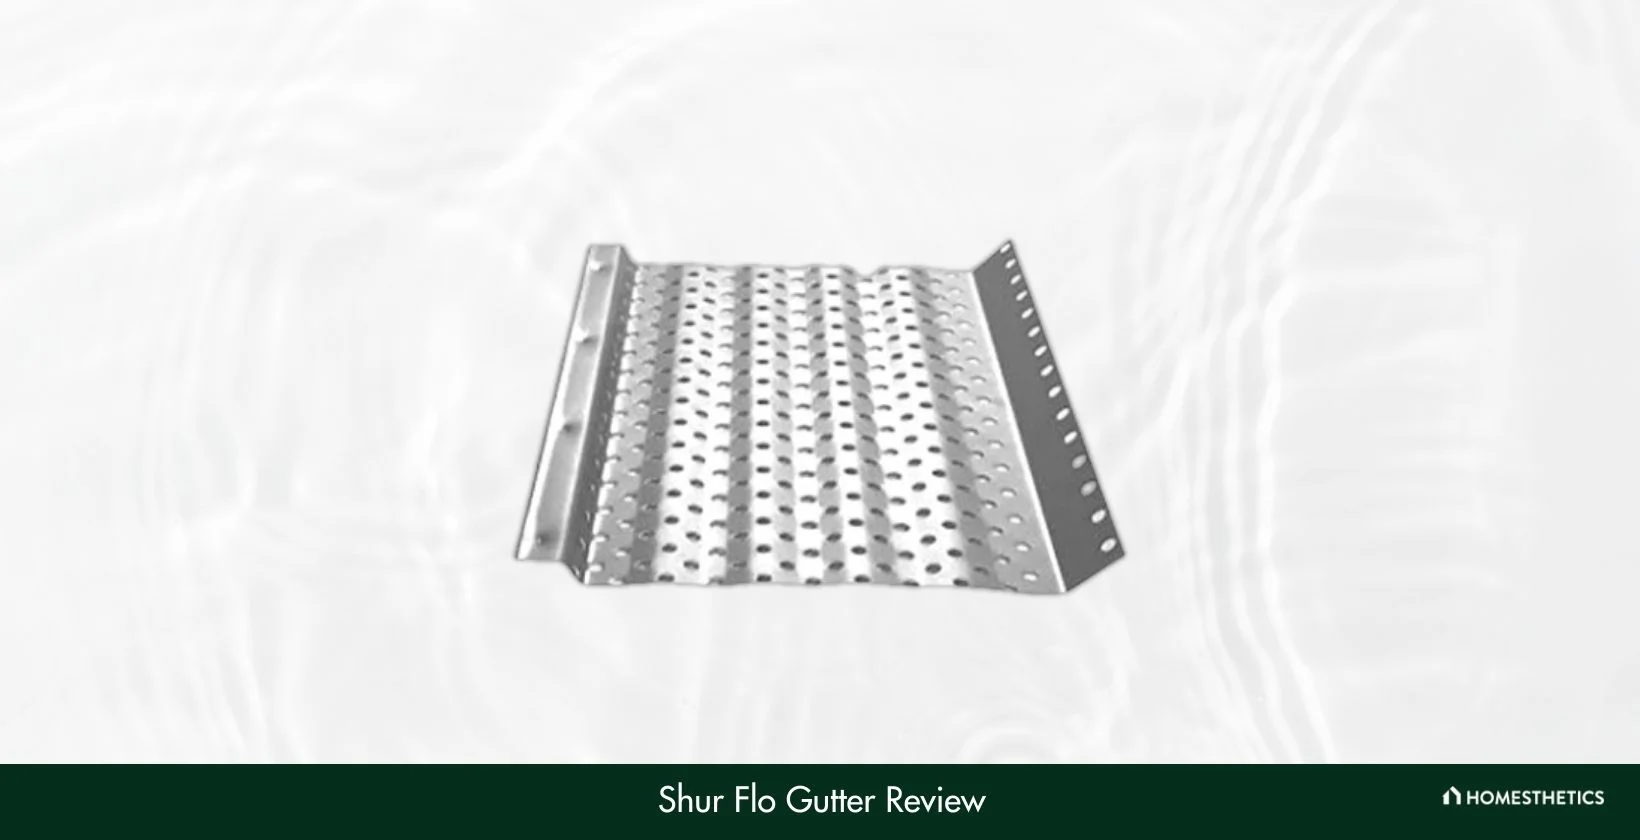 Shur Flo Gutter Review